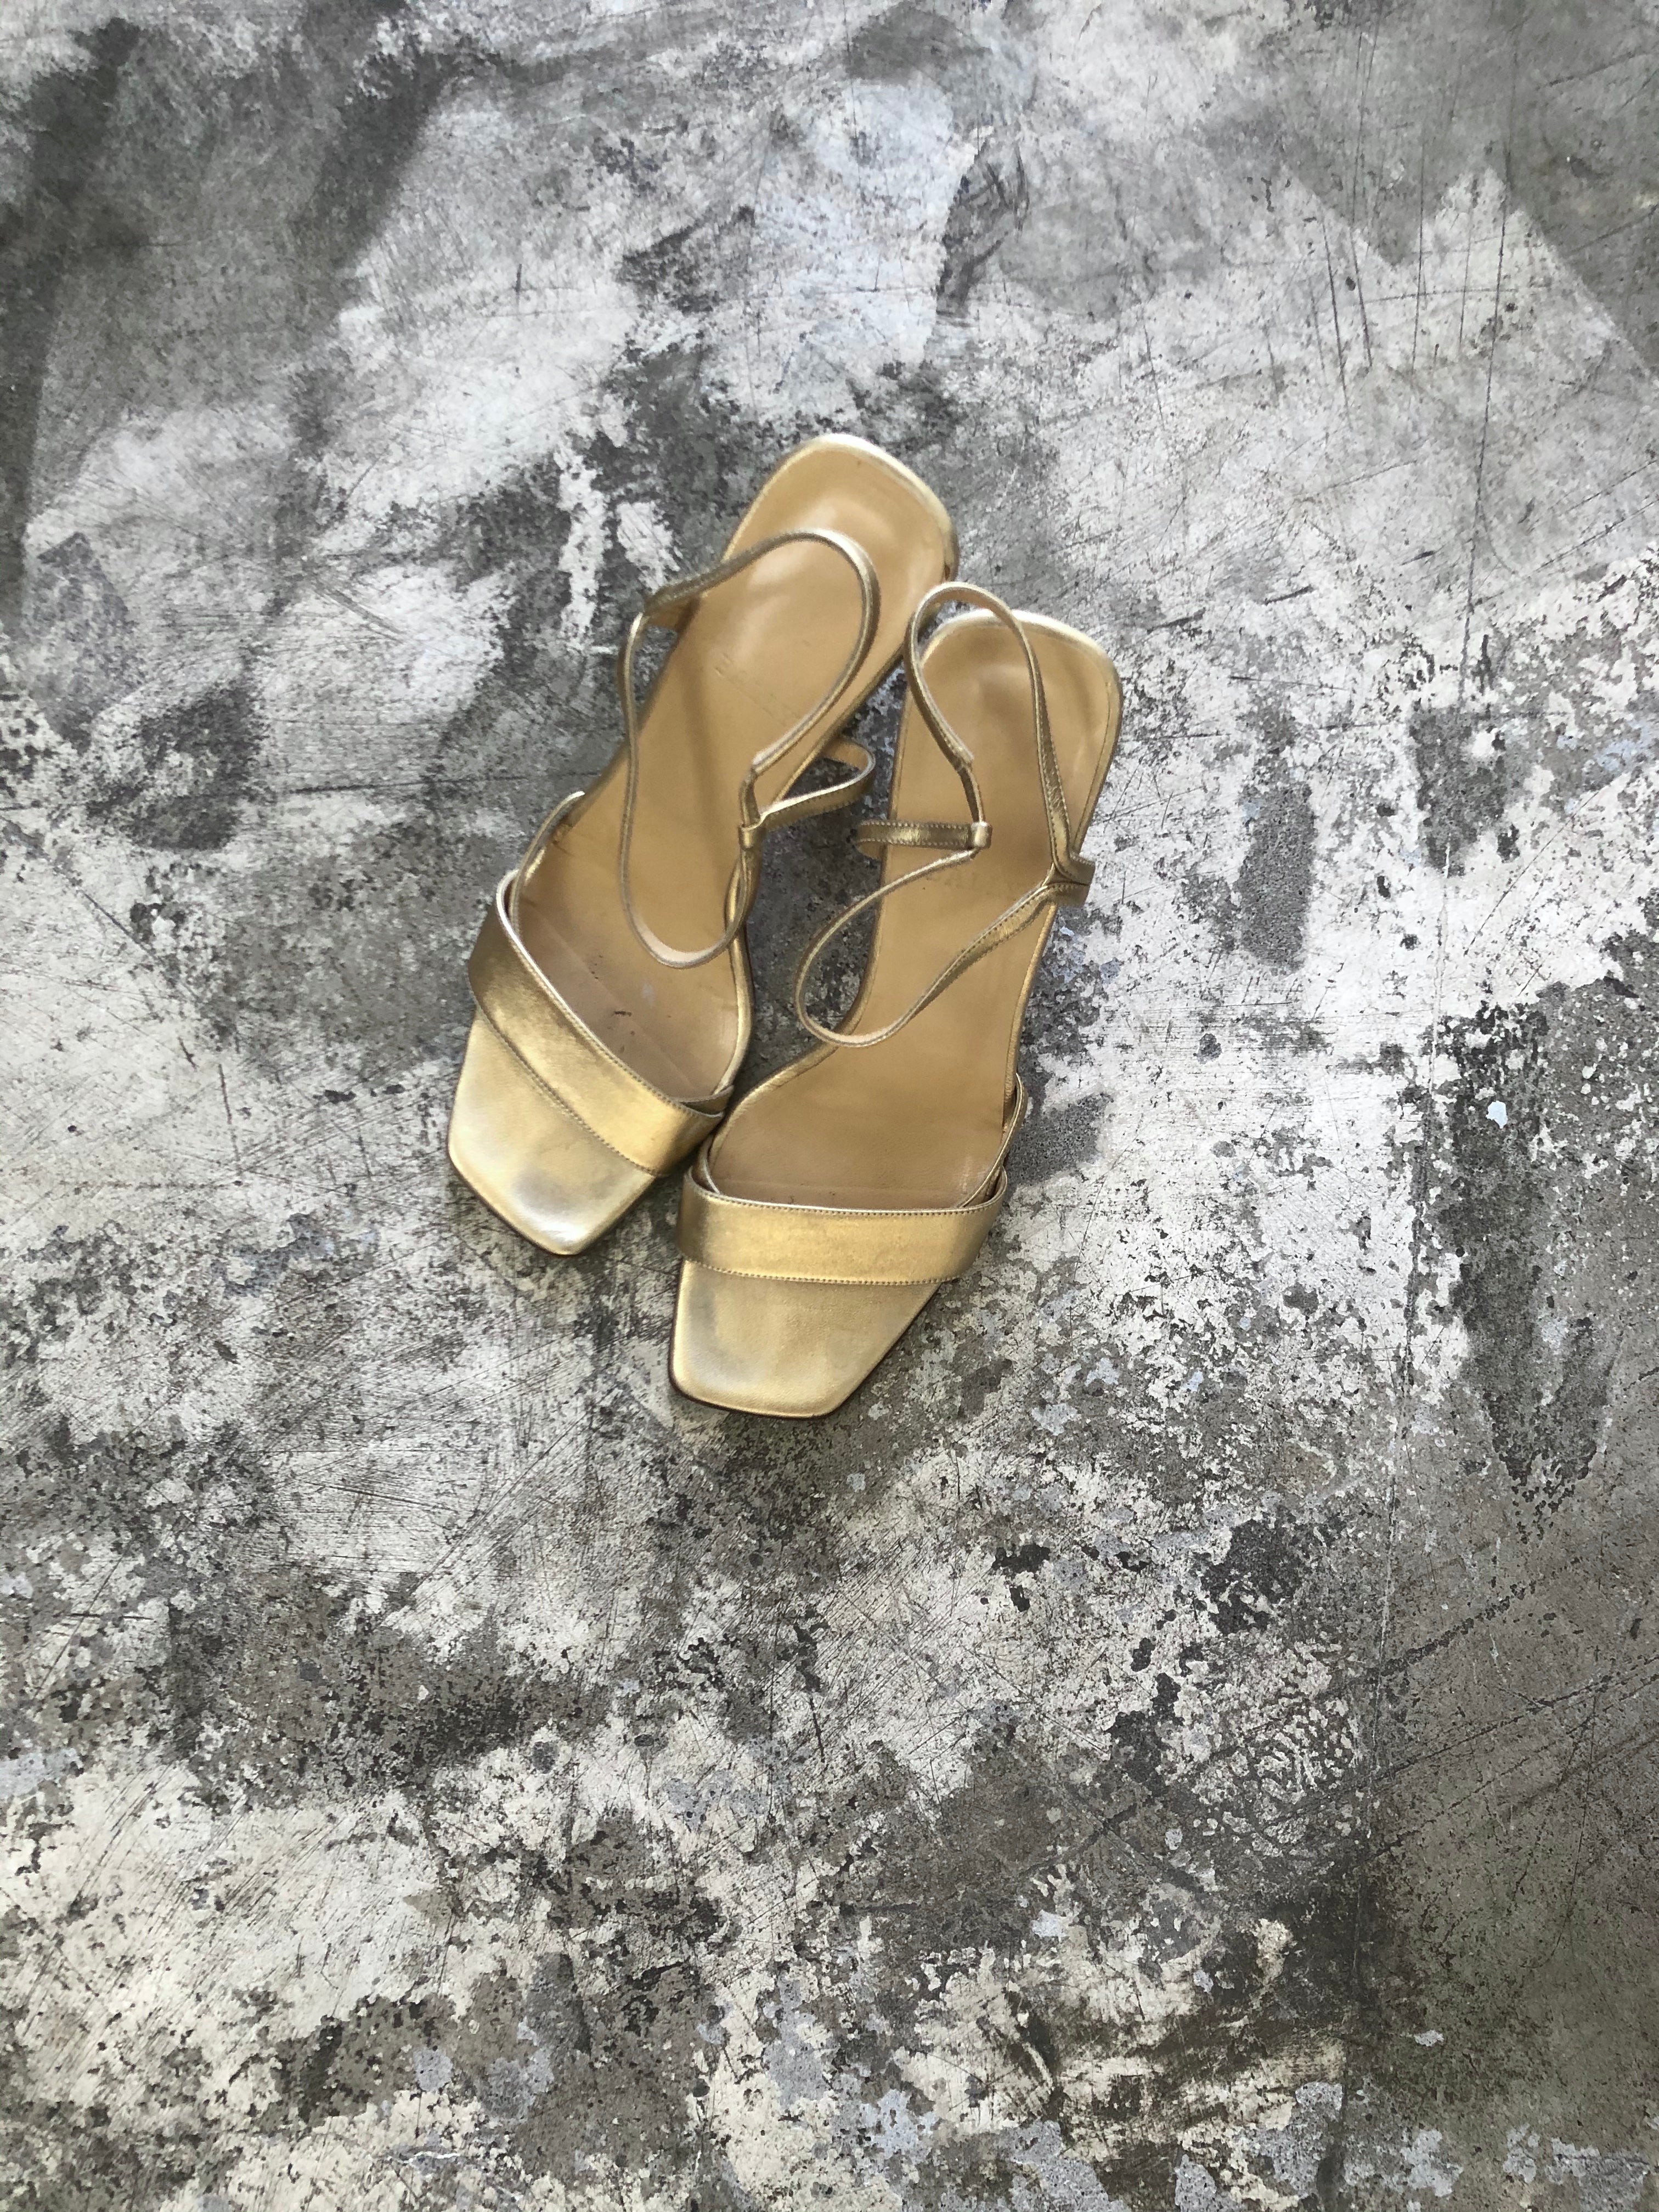 Bally gold leather sandal